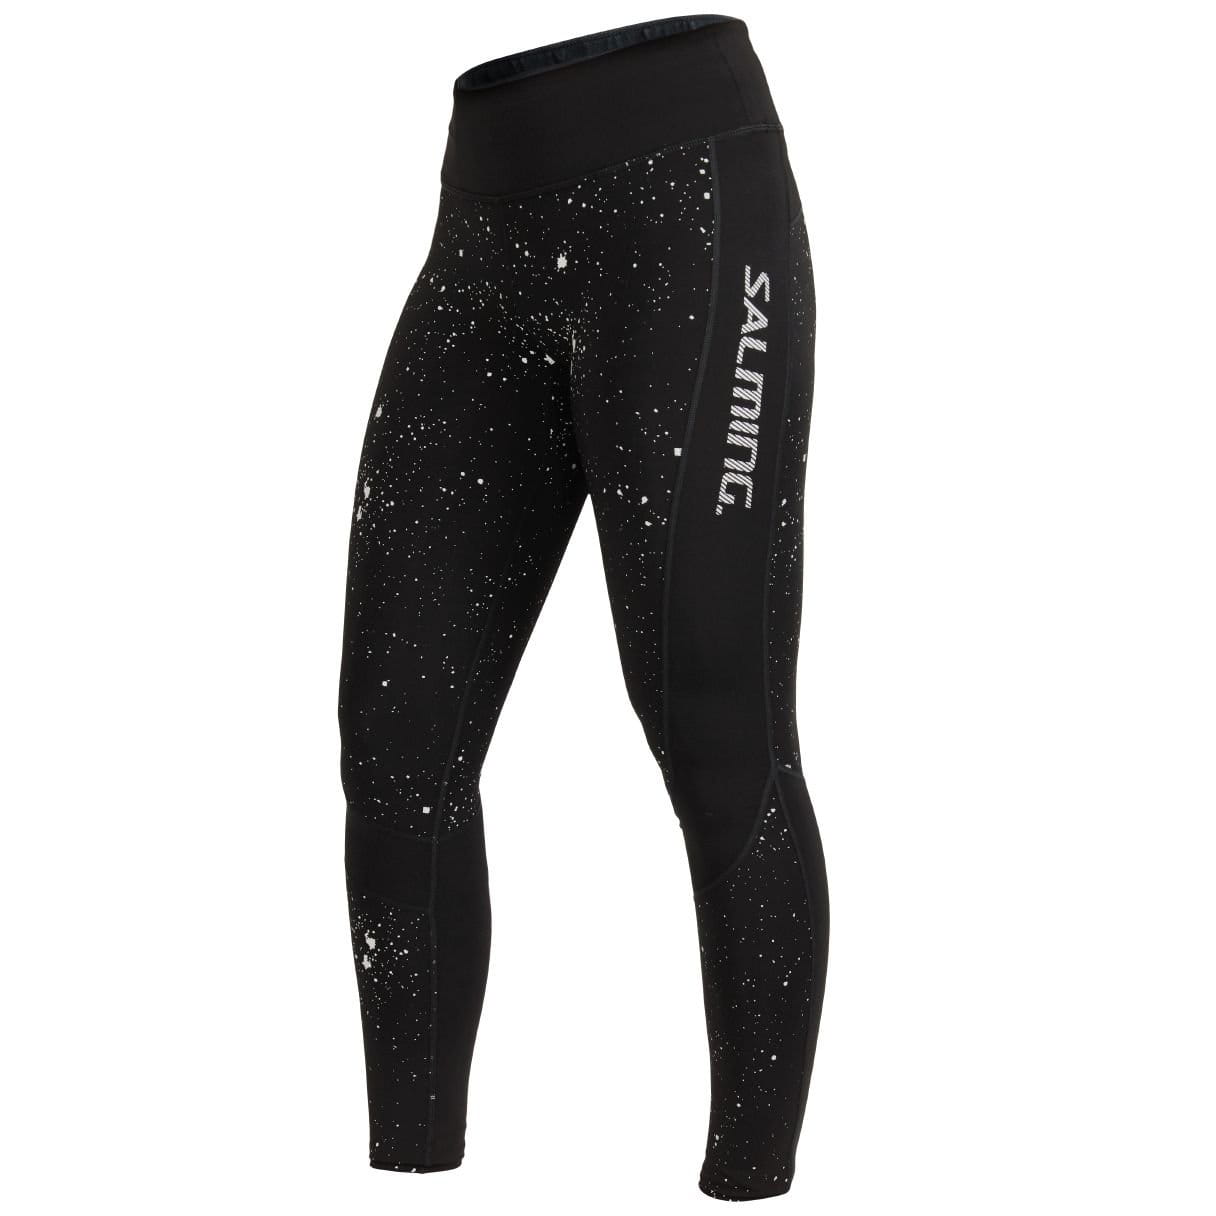 Pantalones cortos de mujer para correr Salming Reflective Tights Women Black/ Silver Reflective